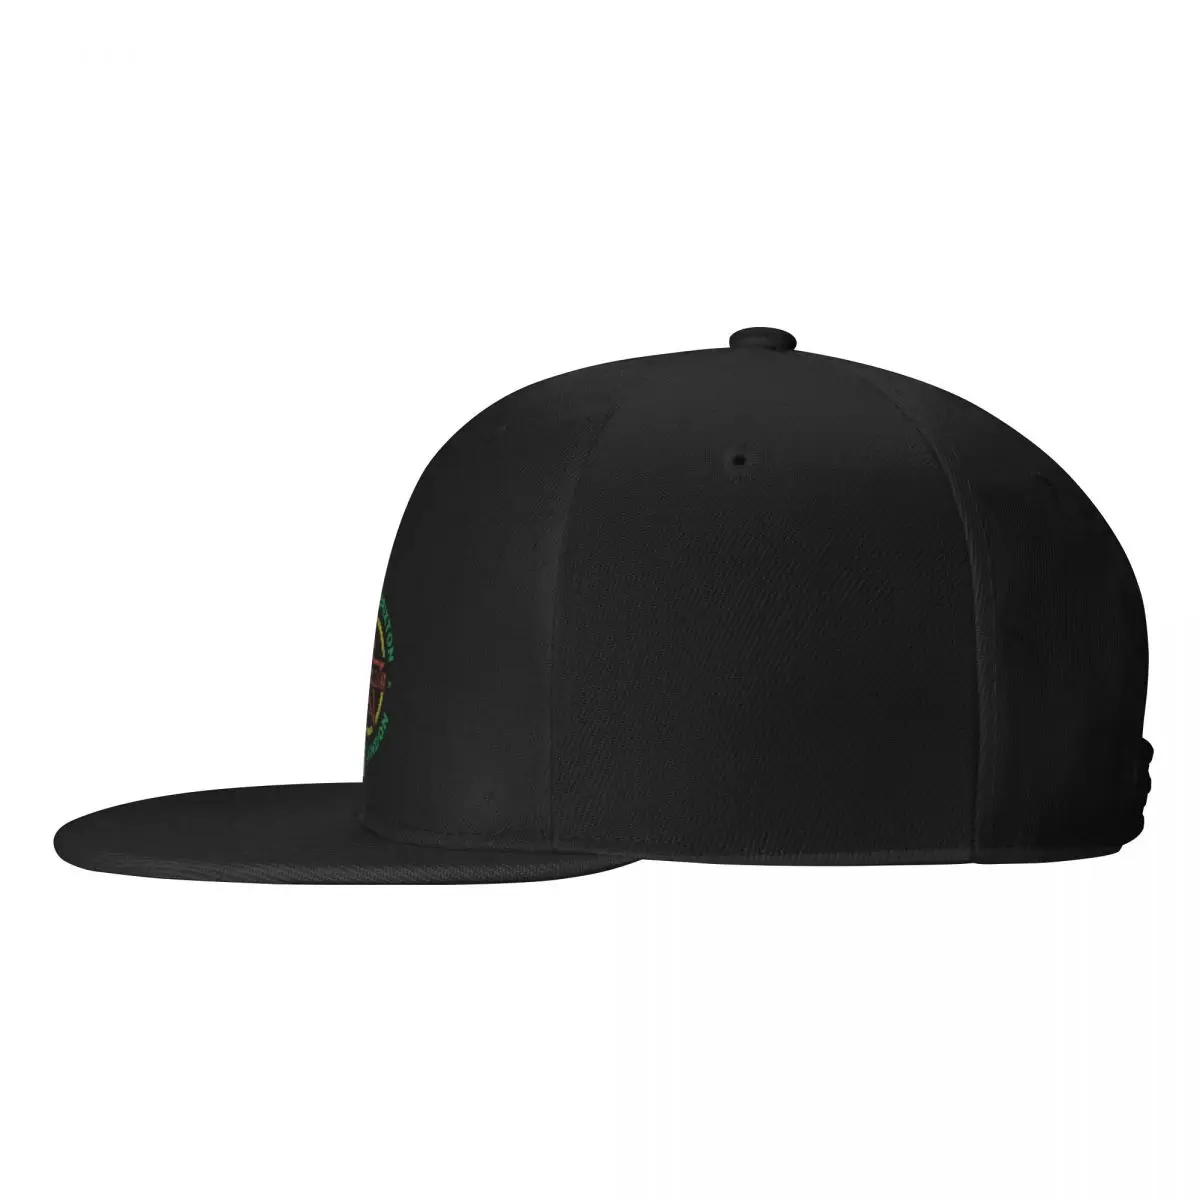 guns of brixton Baseball Cap Hat Man Luxury Hat Beach Bobble Hat Hat For Man Women's